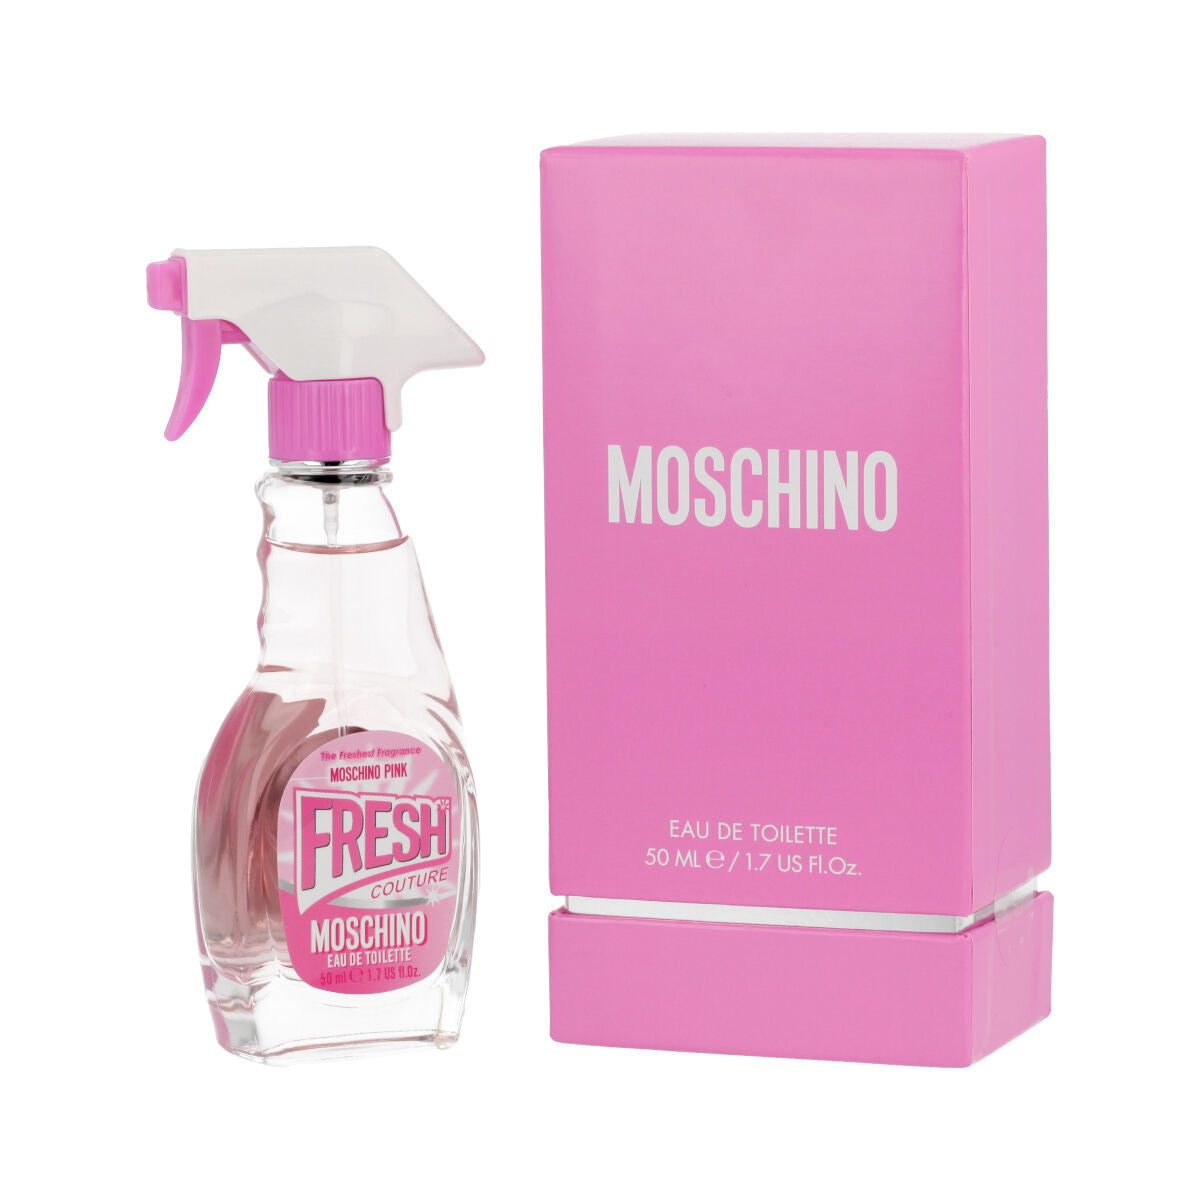 Perfume de femmes Moschino Edt Pink Fresh Couture 50 ml